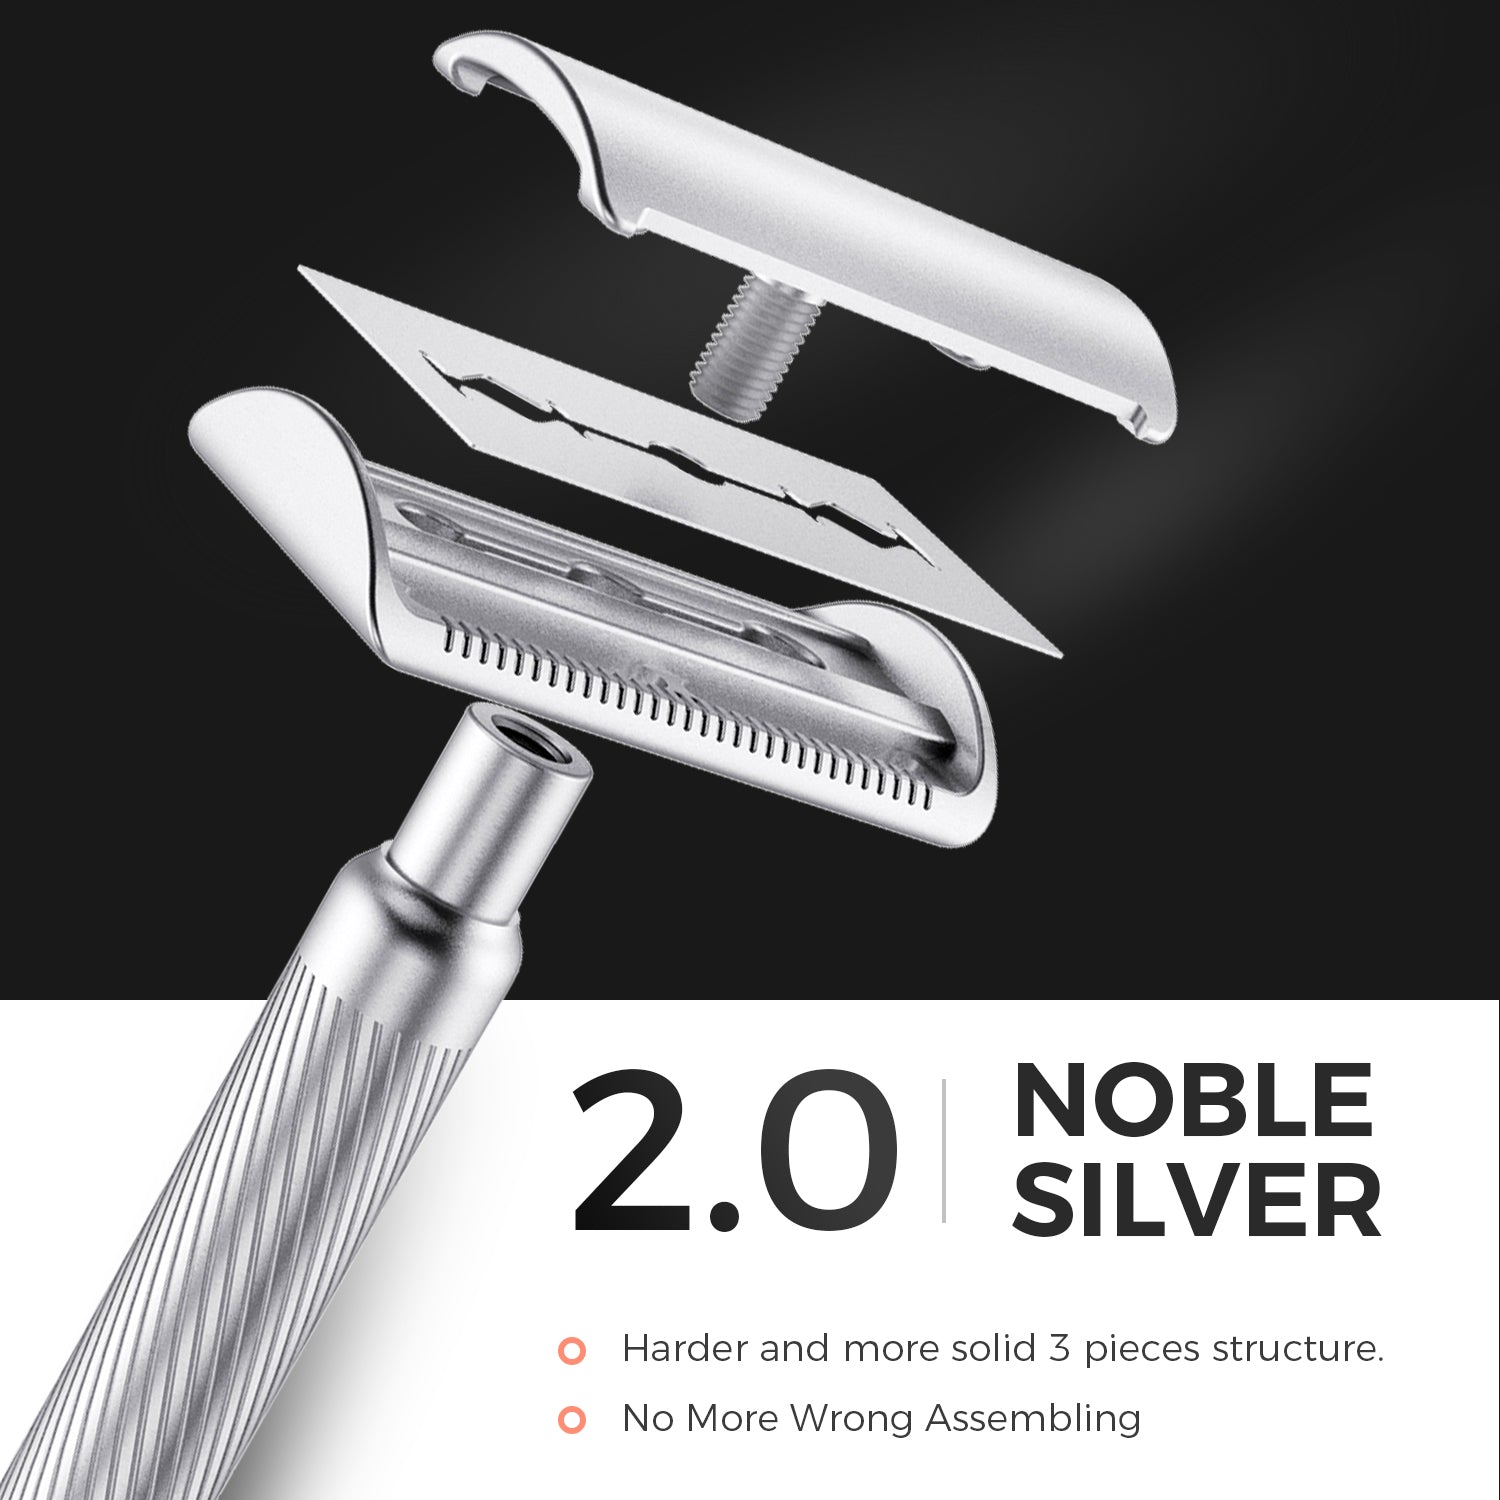 Noble silver double edge safety razor combination